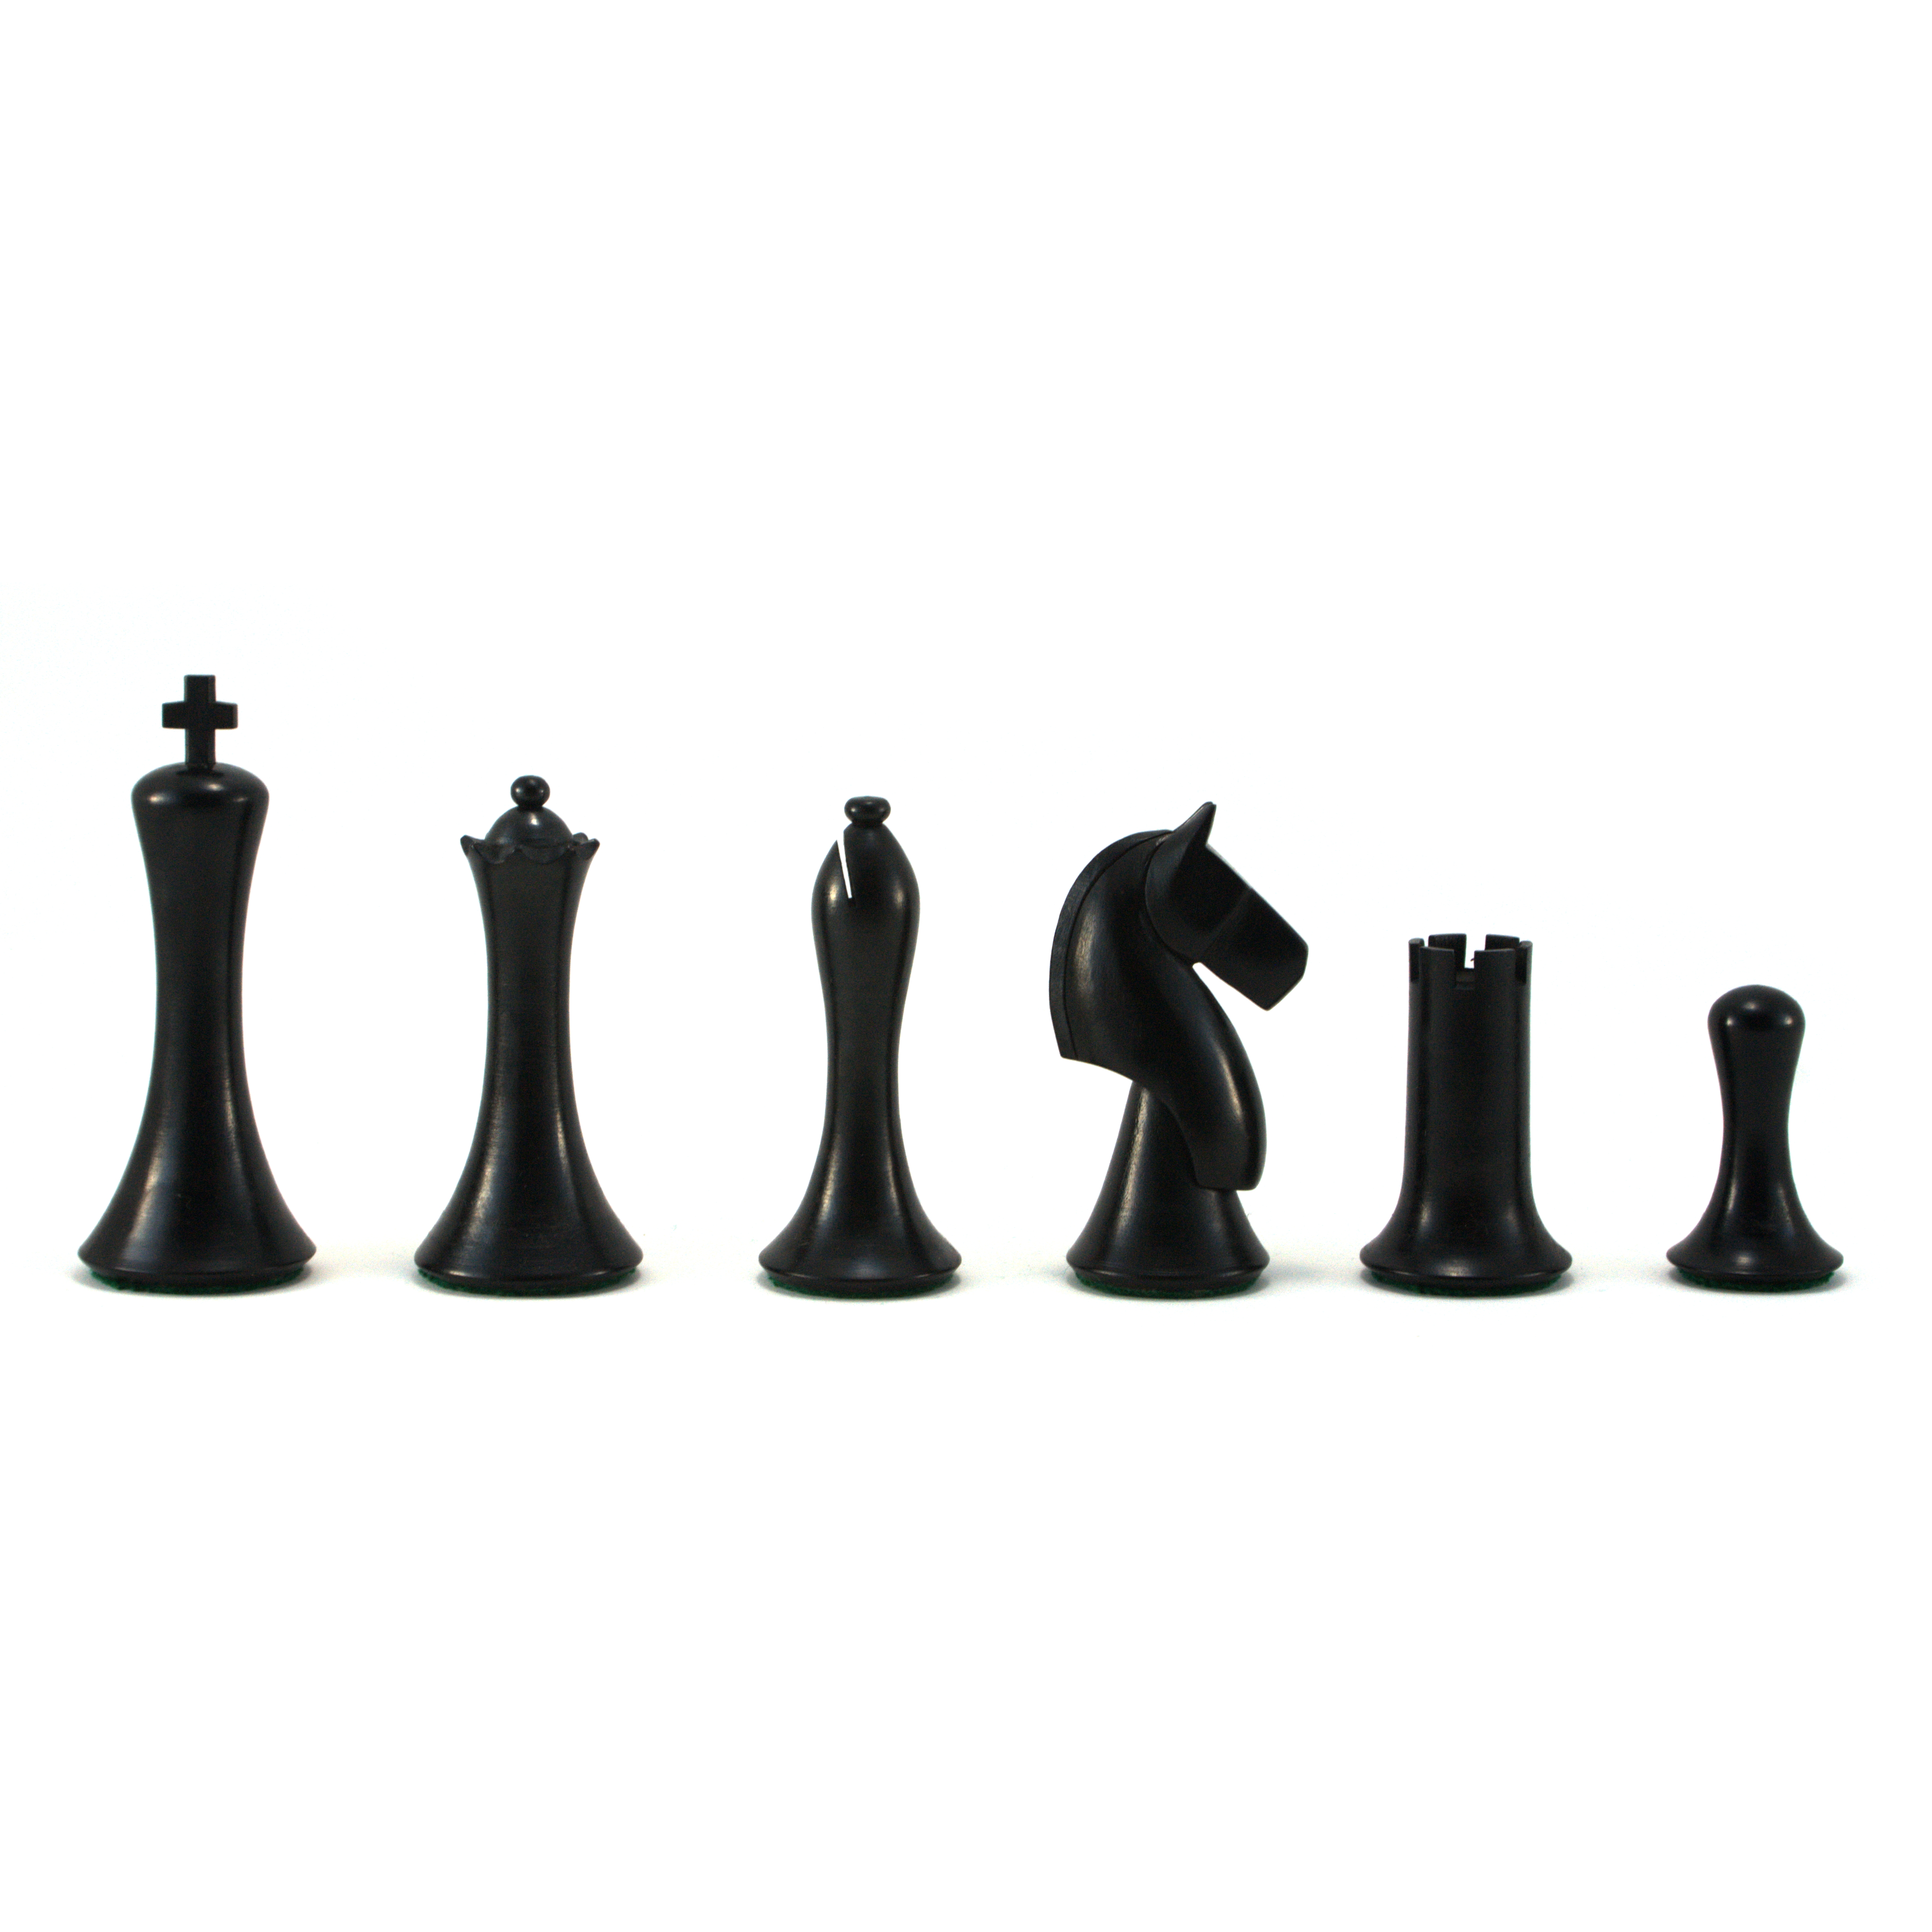 Chess-Brabo: Revolution in the millennium part 3